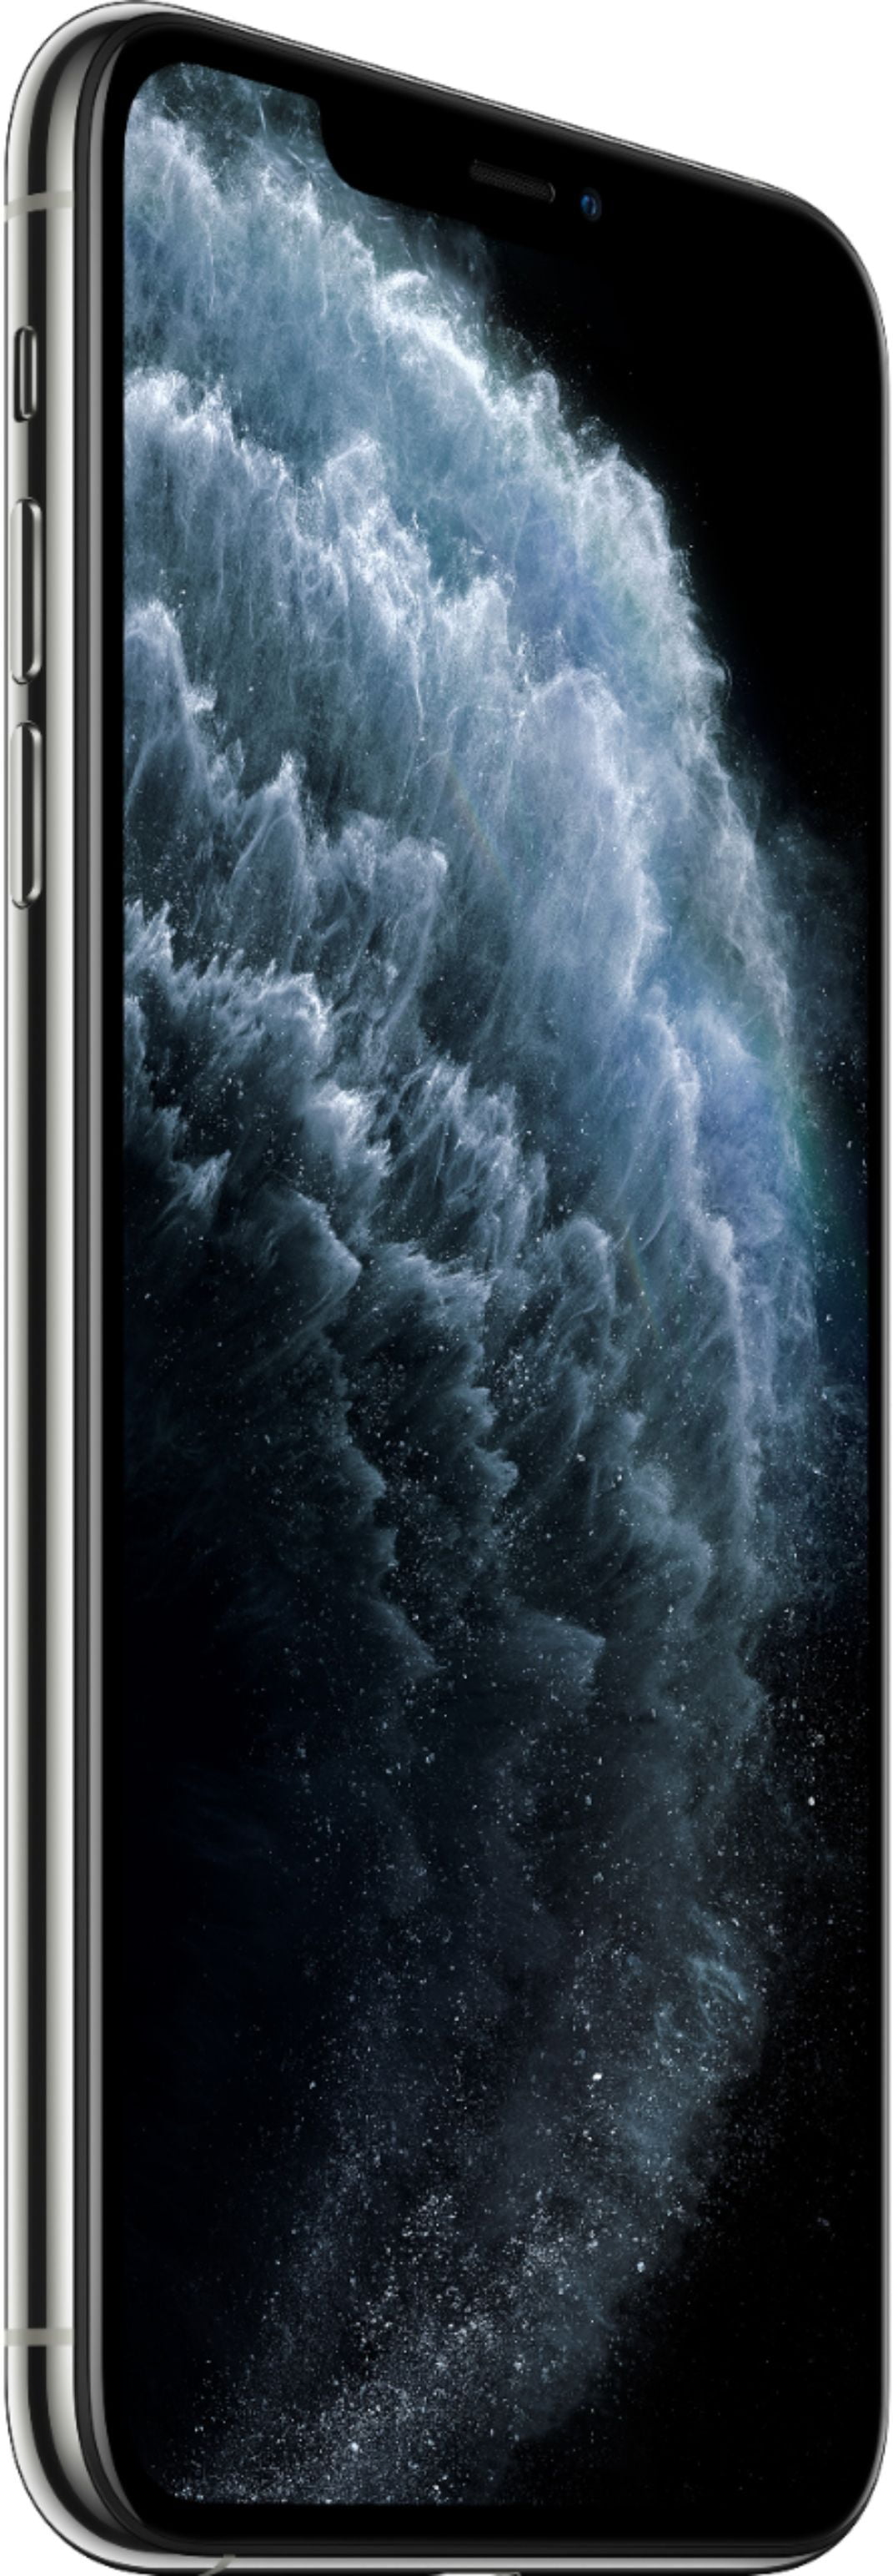 iPhone 11 Pro Max 512GB Midnight Green - Refurbished product